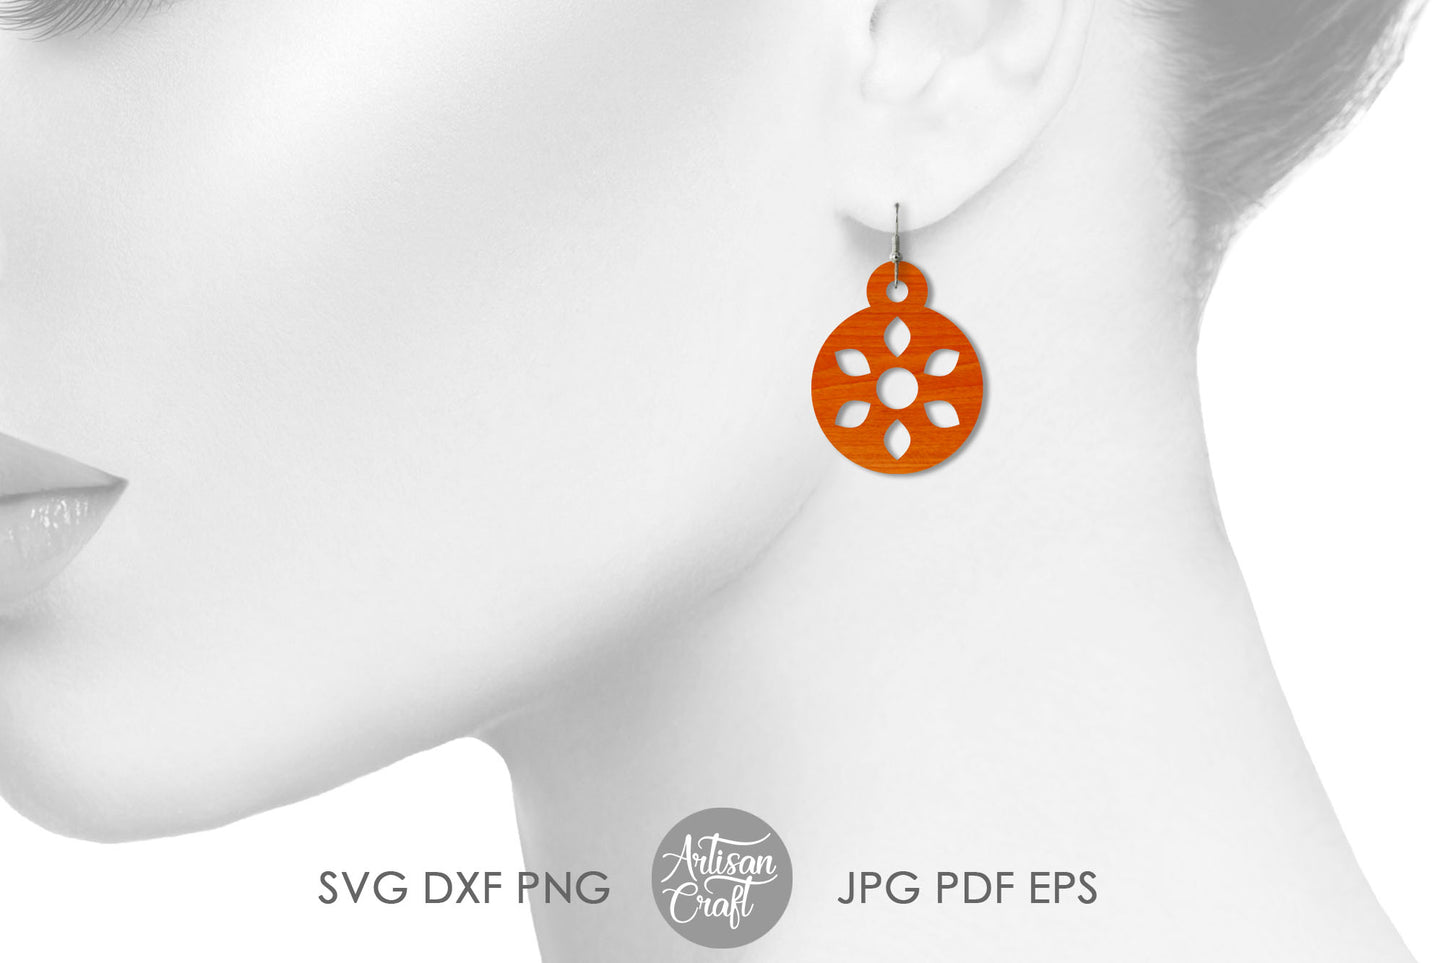 Mandala Earring SVG files for laser cutting